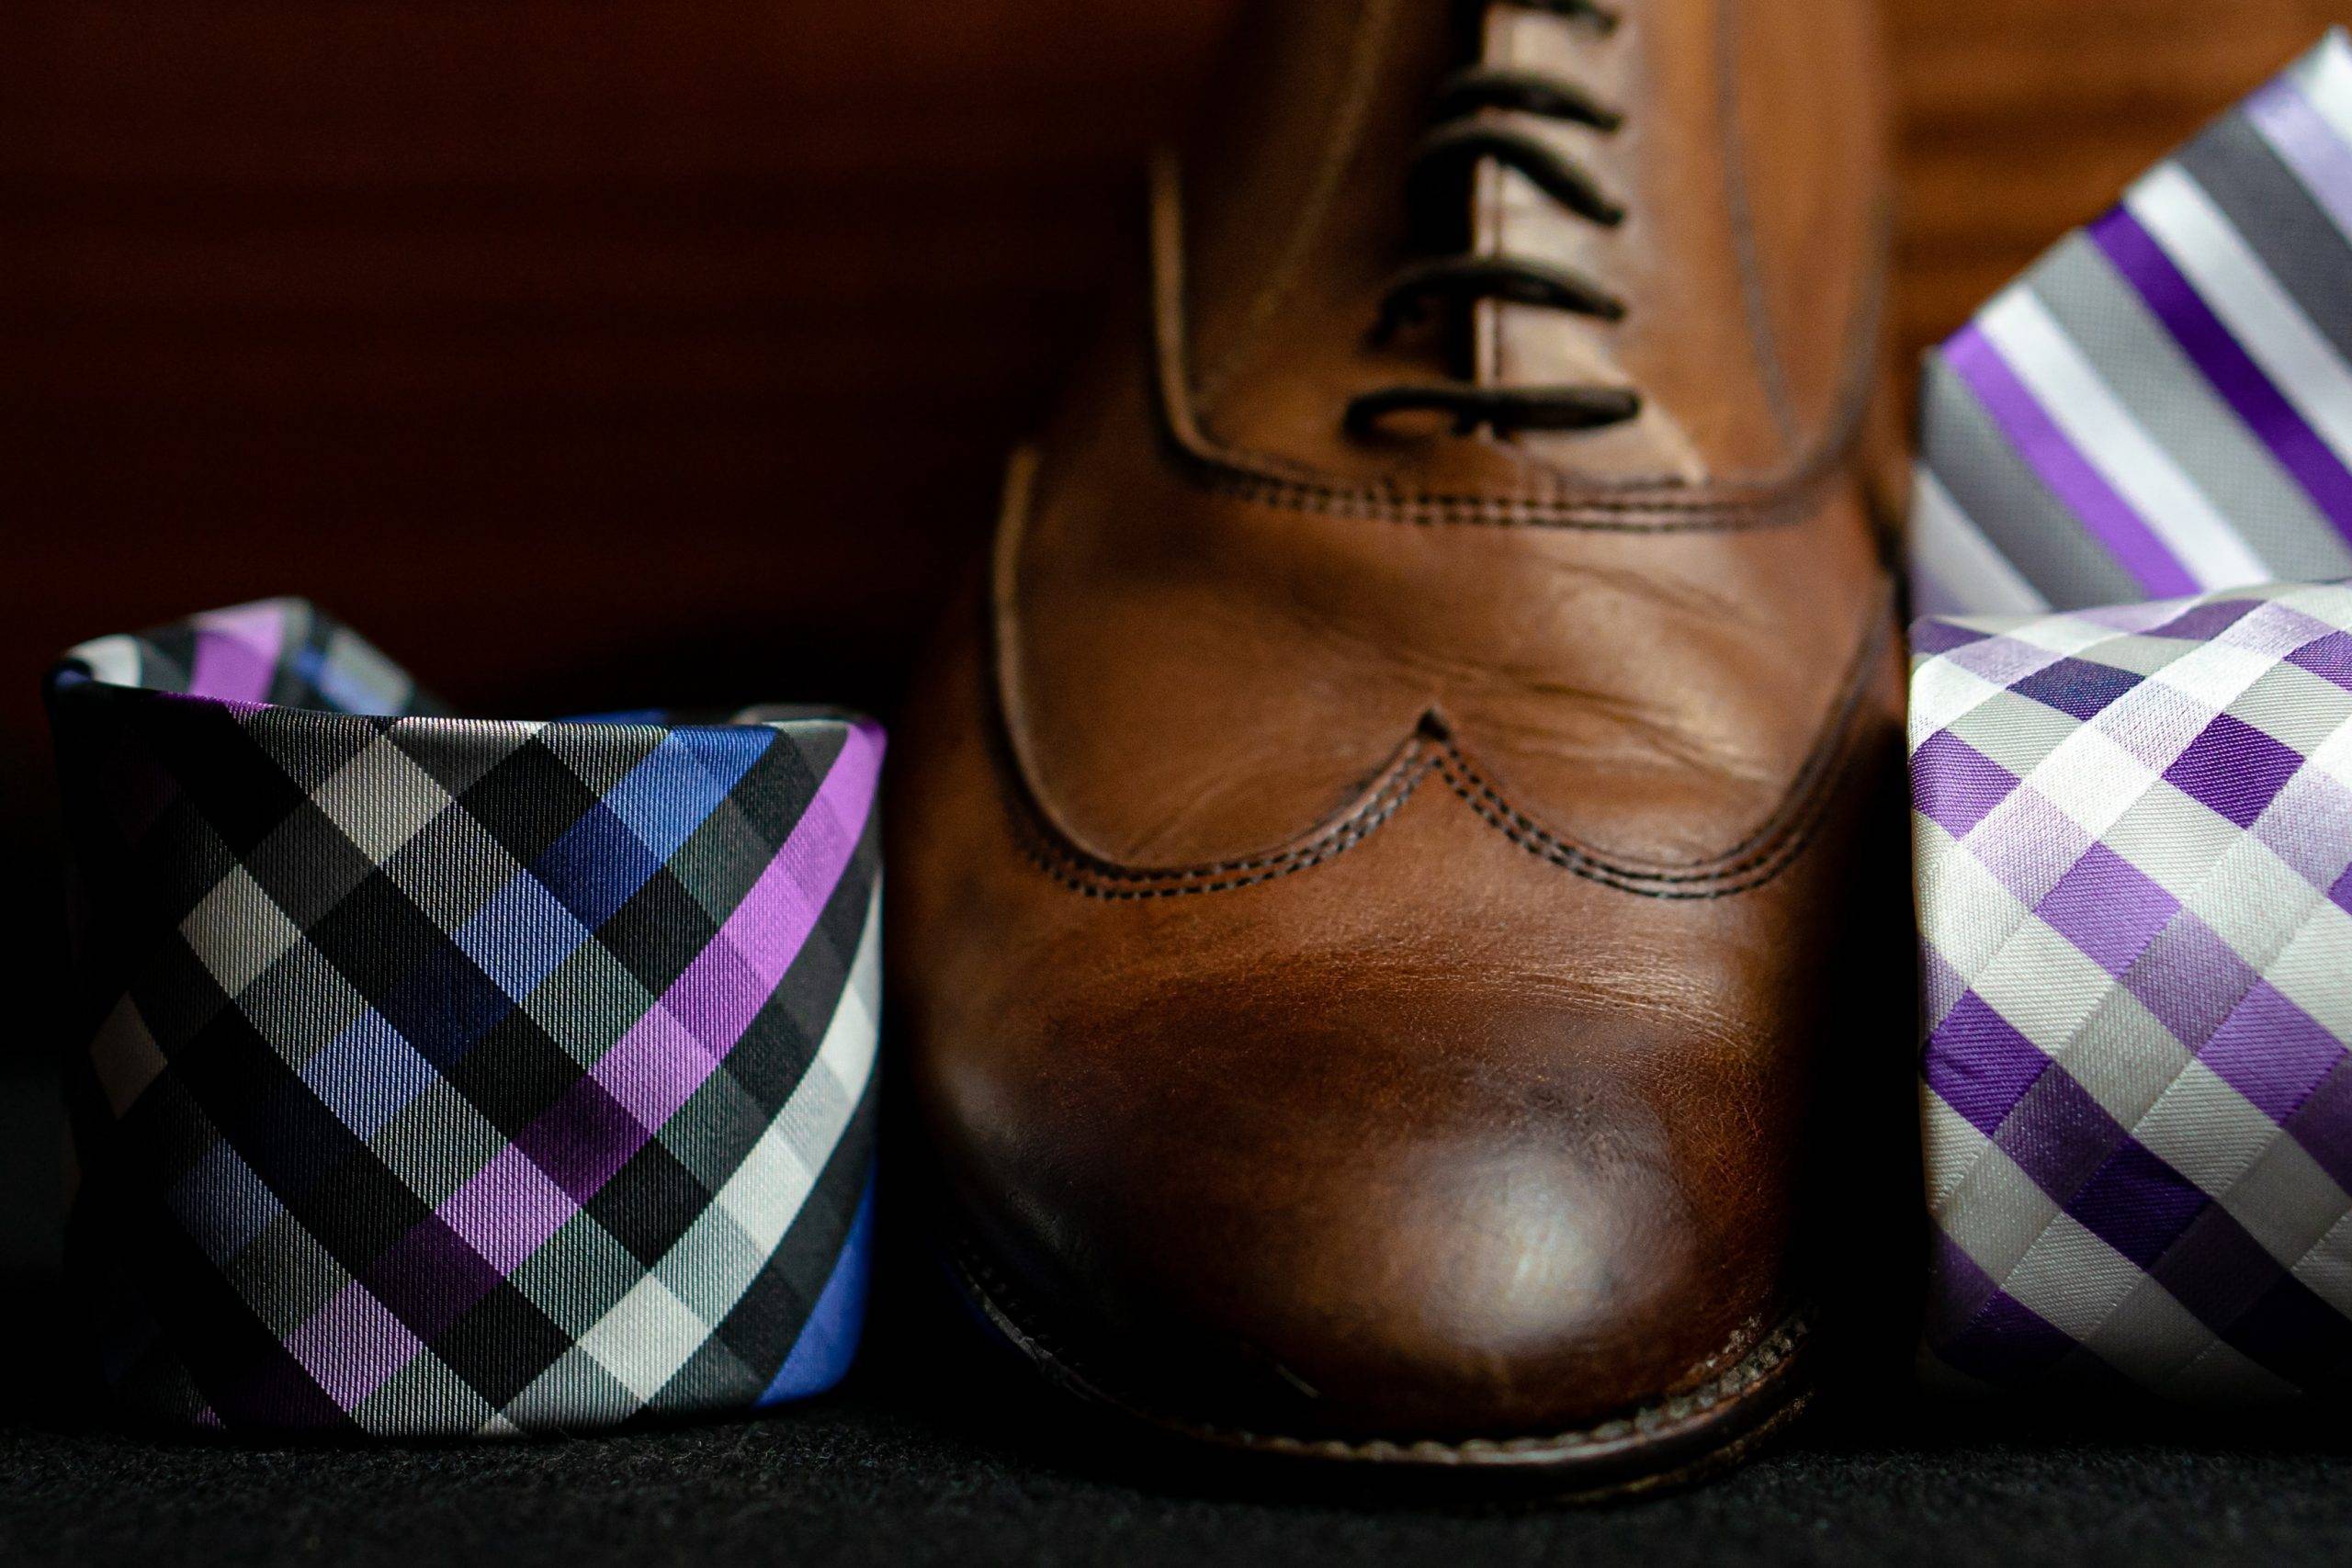 Cravată și pantofi eleganți